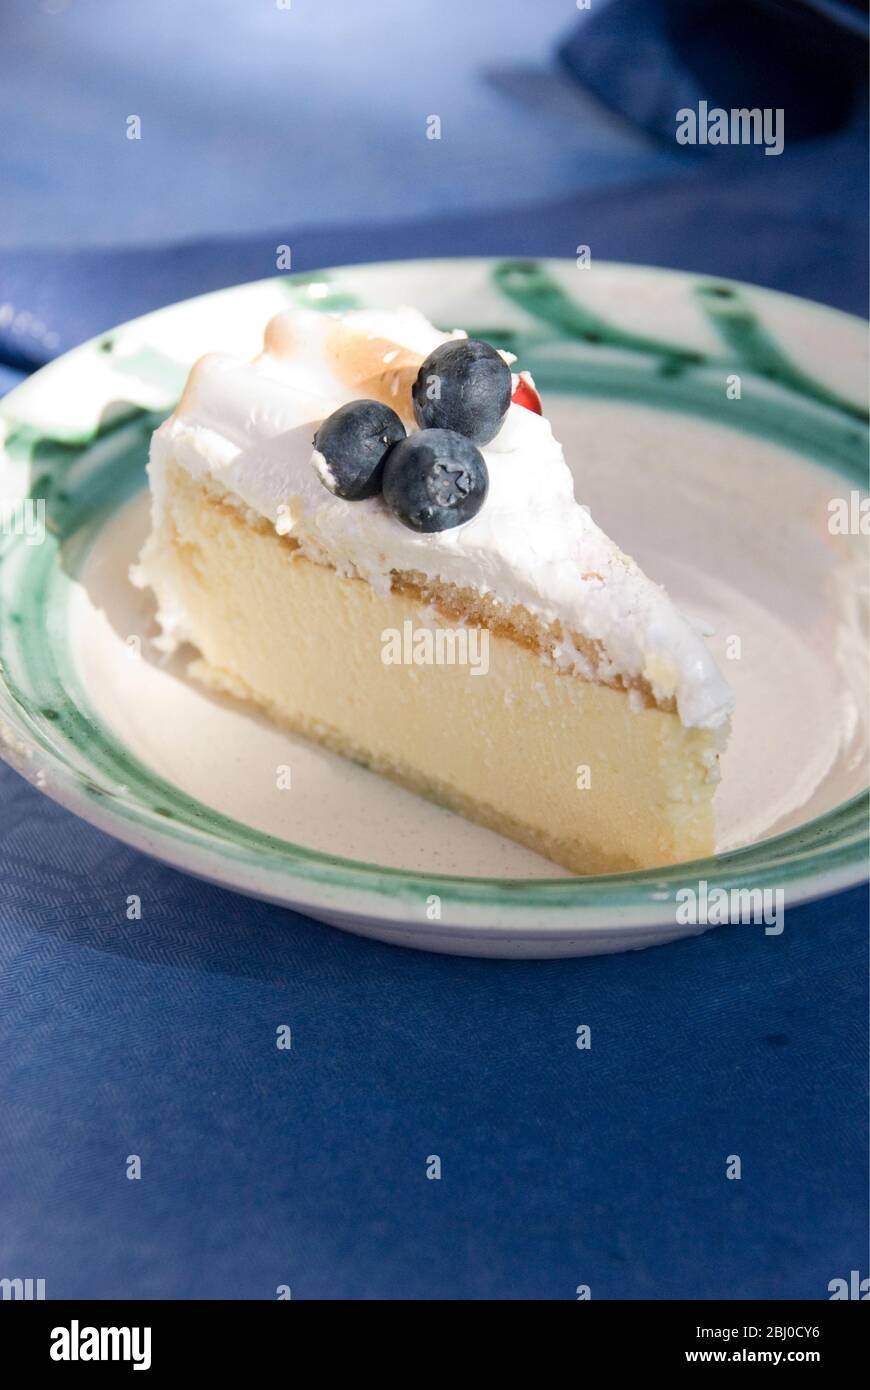 Slice of celebration gateau of light lemon and passionfruit mousse with soft meringue topping. - Stock Photo